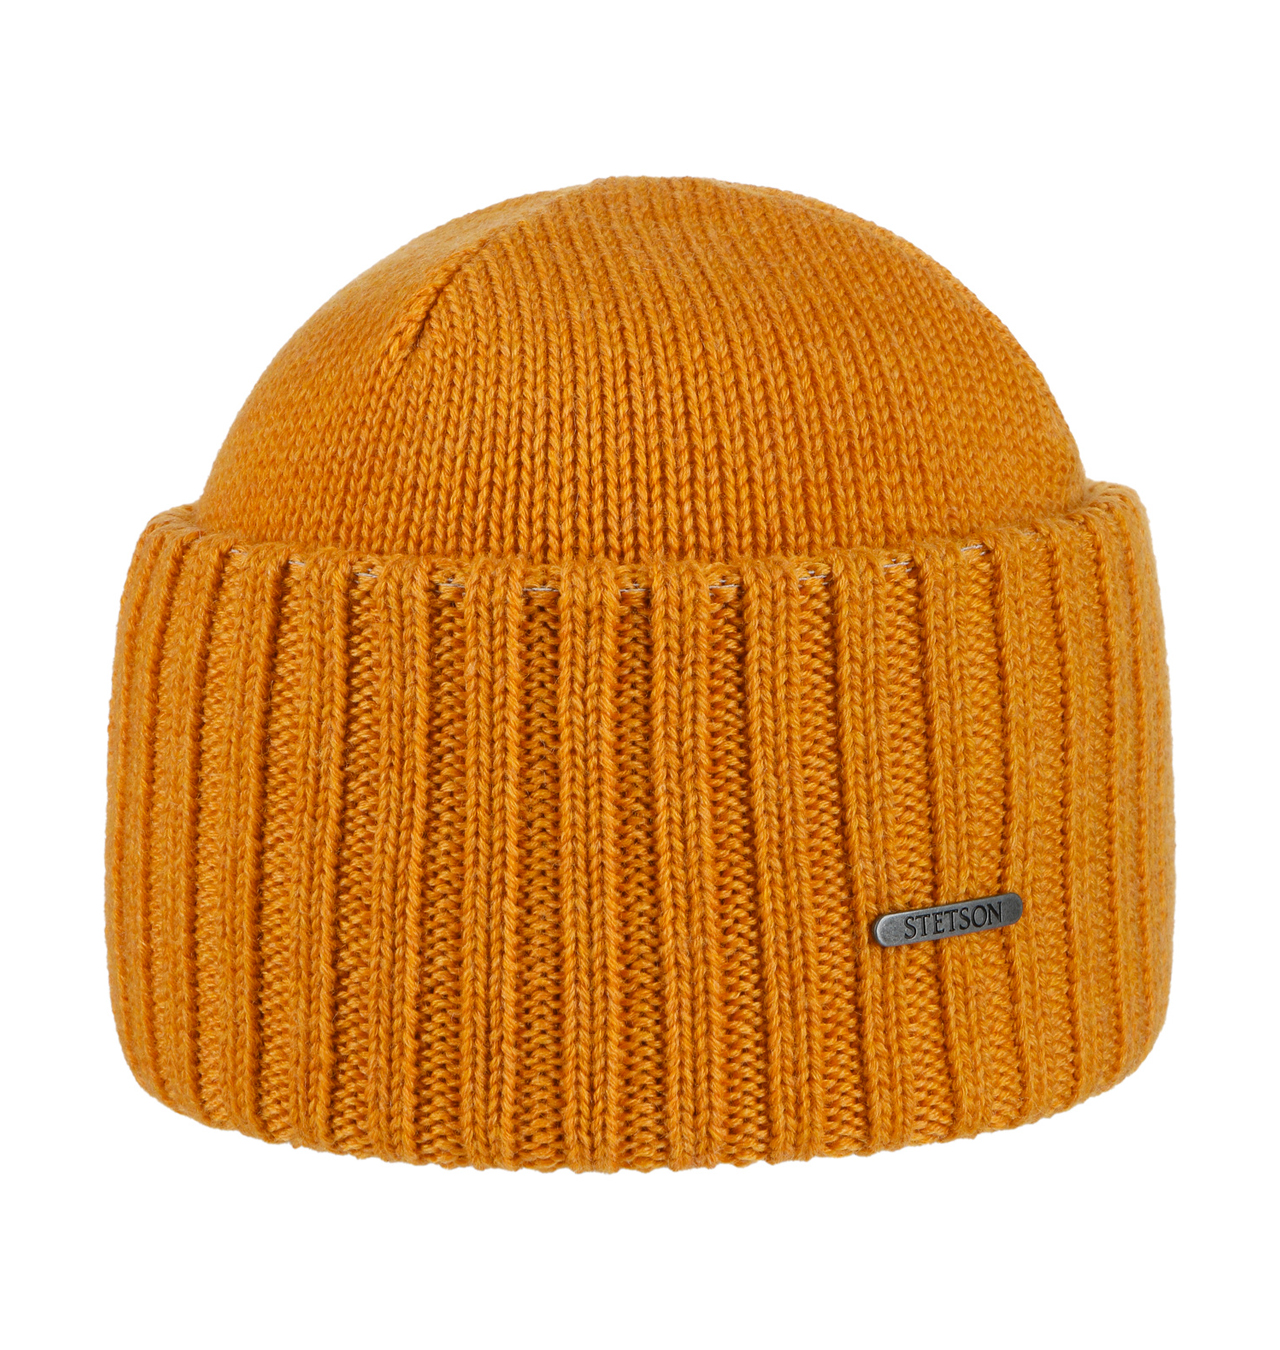 Stetson - Northport Knit Hat - Mustard